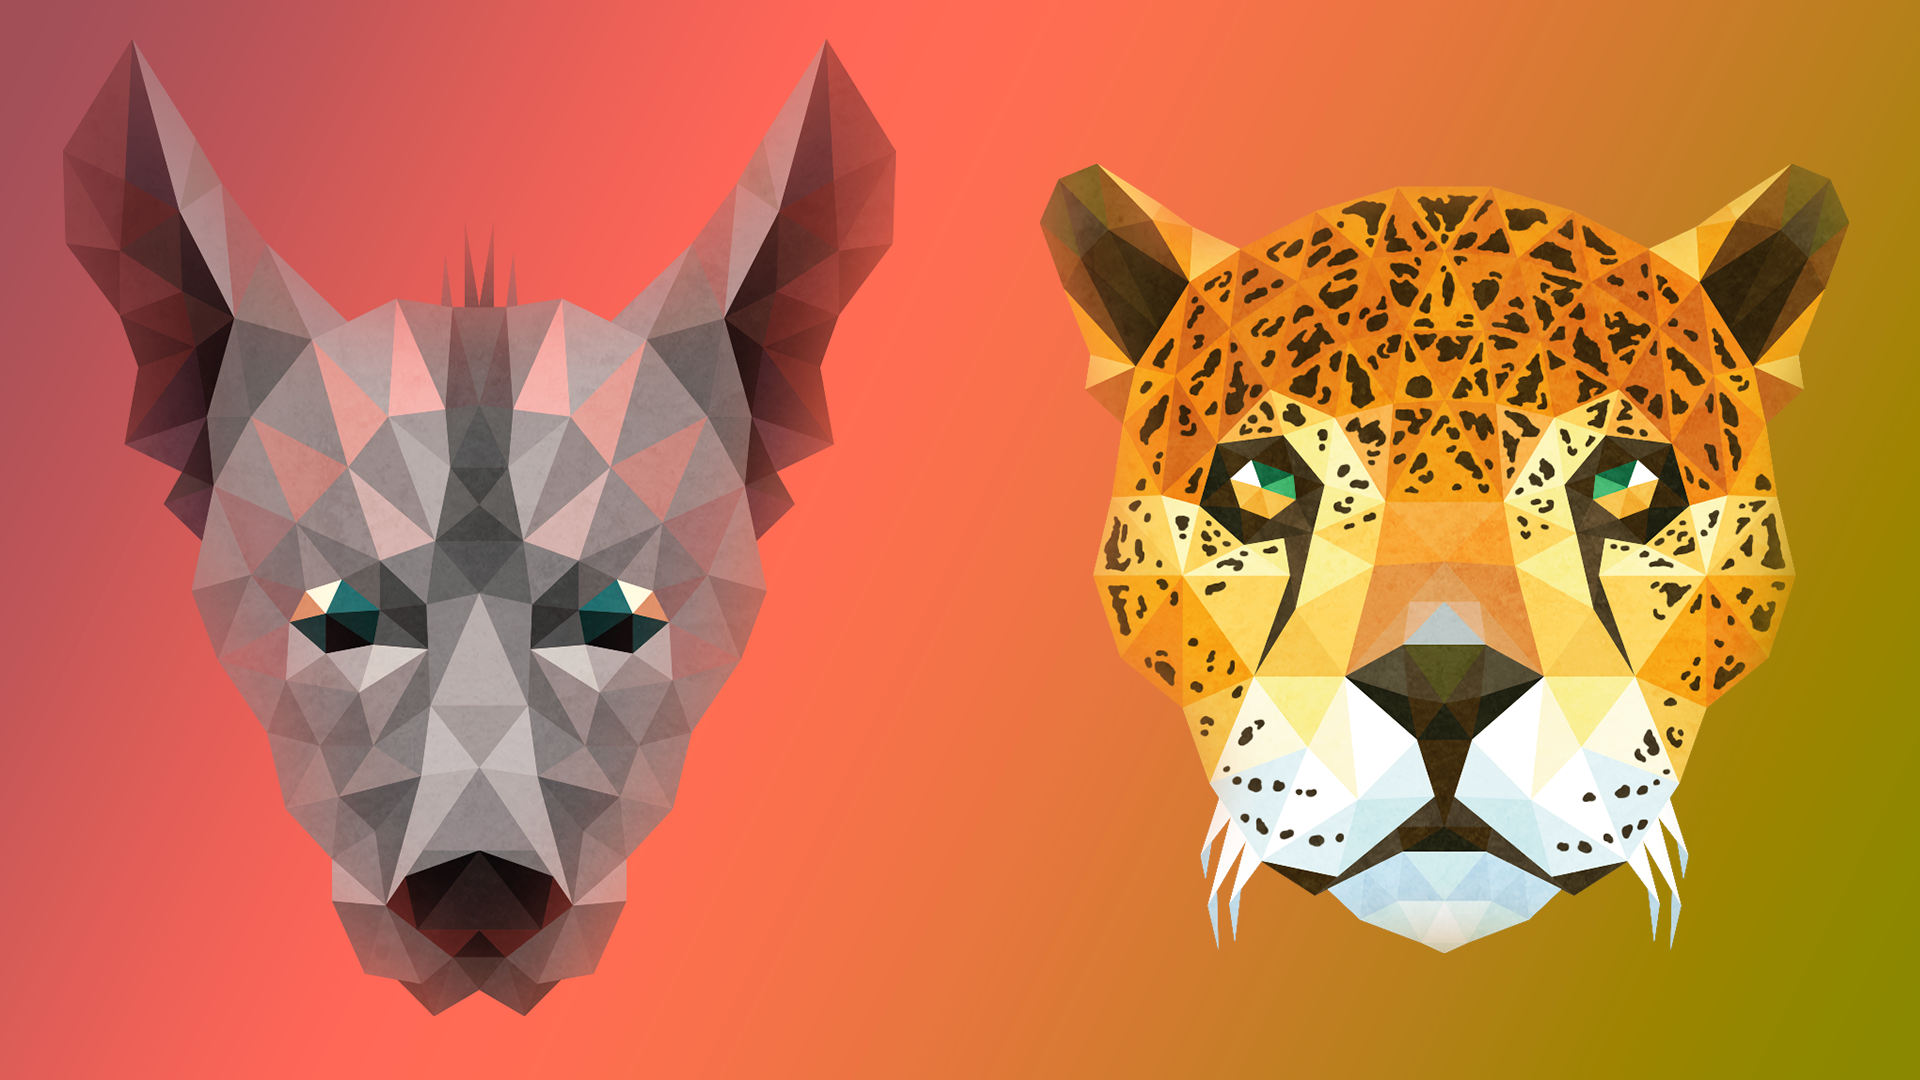 VIA - Portrait fauna art (Xolo & Jaguar)